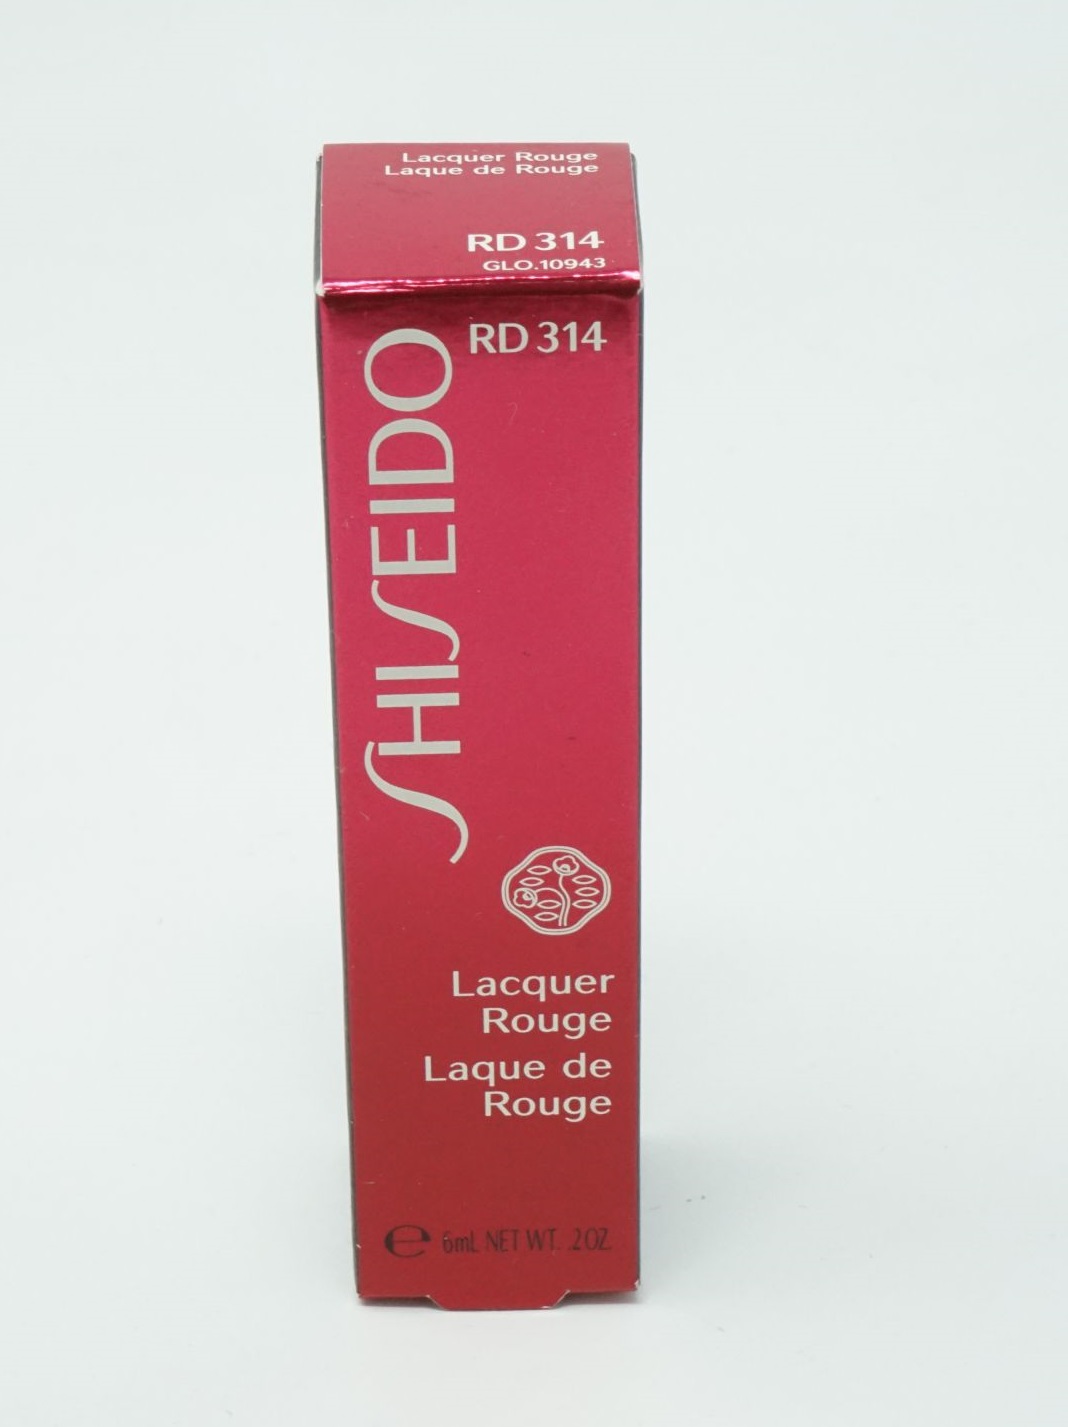 Shiseido Lacquer Rouge Lipgloss 6ml RD 314